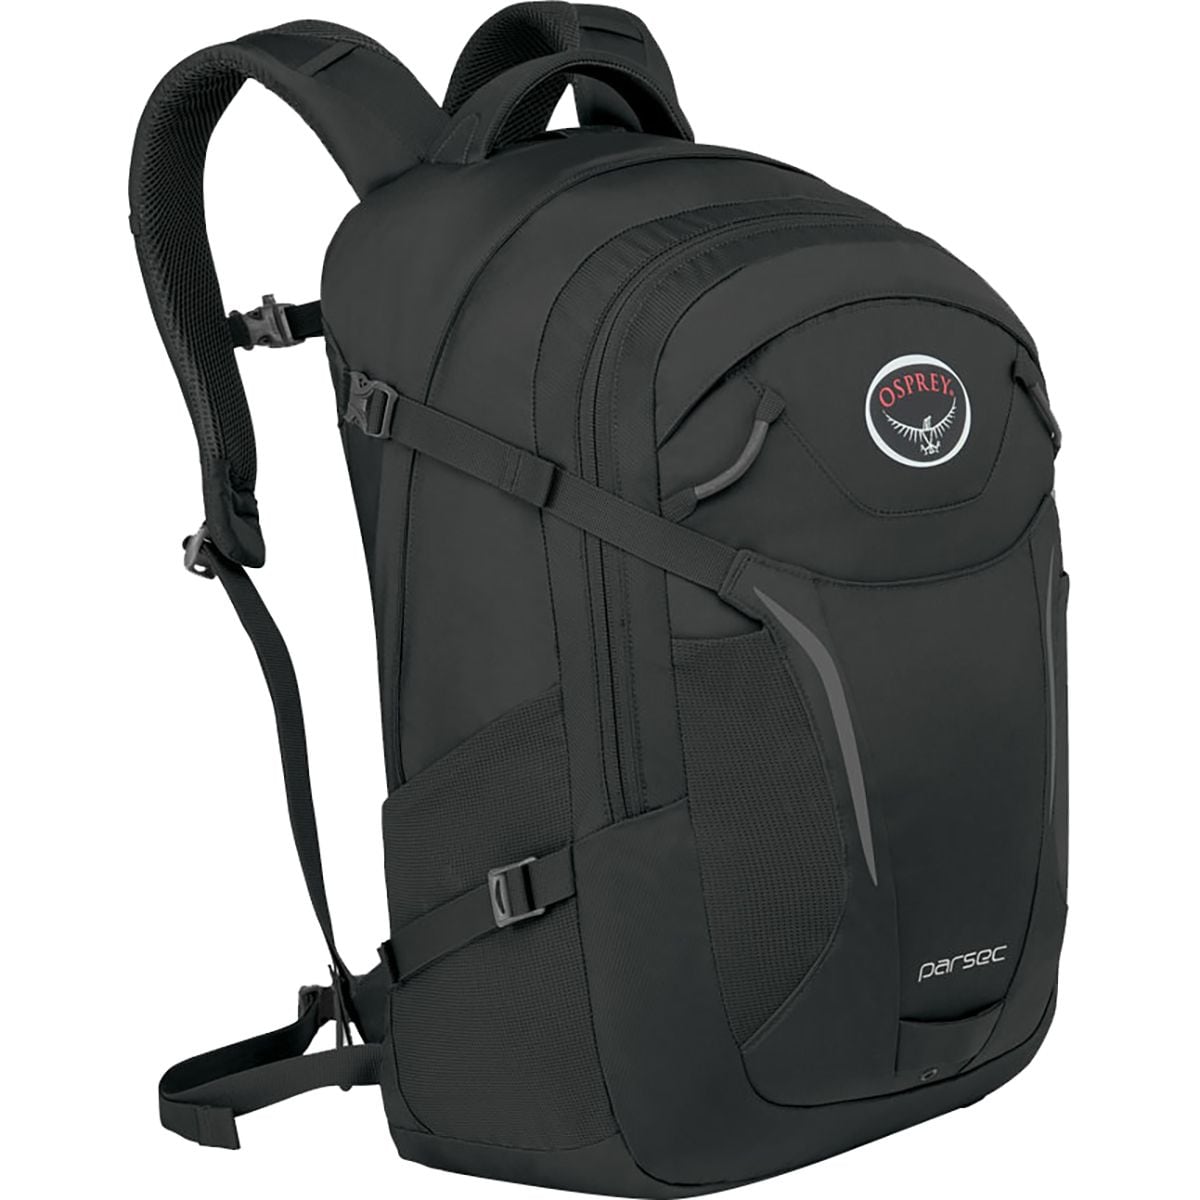 Osprey Packs Parsec Backpack - 1892cu in Black, One Size